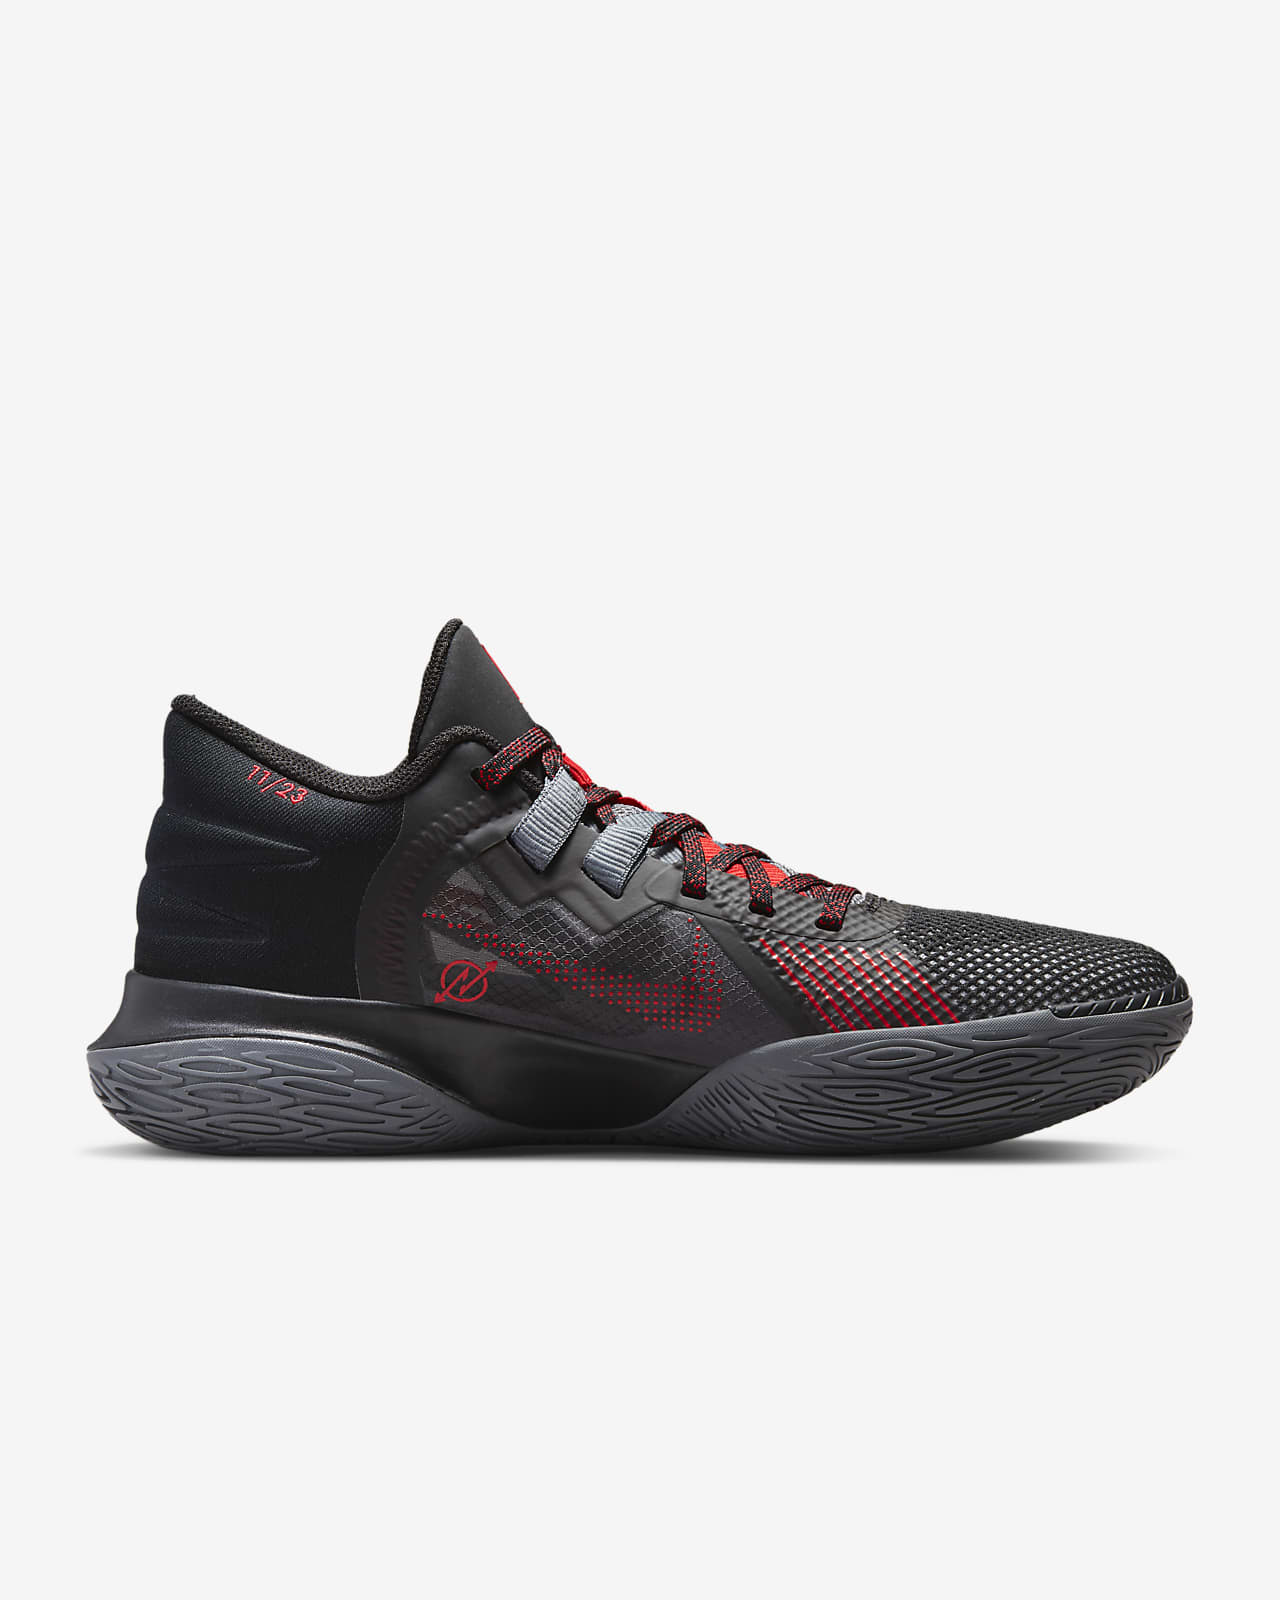 Kyrie Flytrap 5 Basketball Shoes. Nike HR